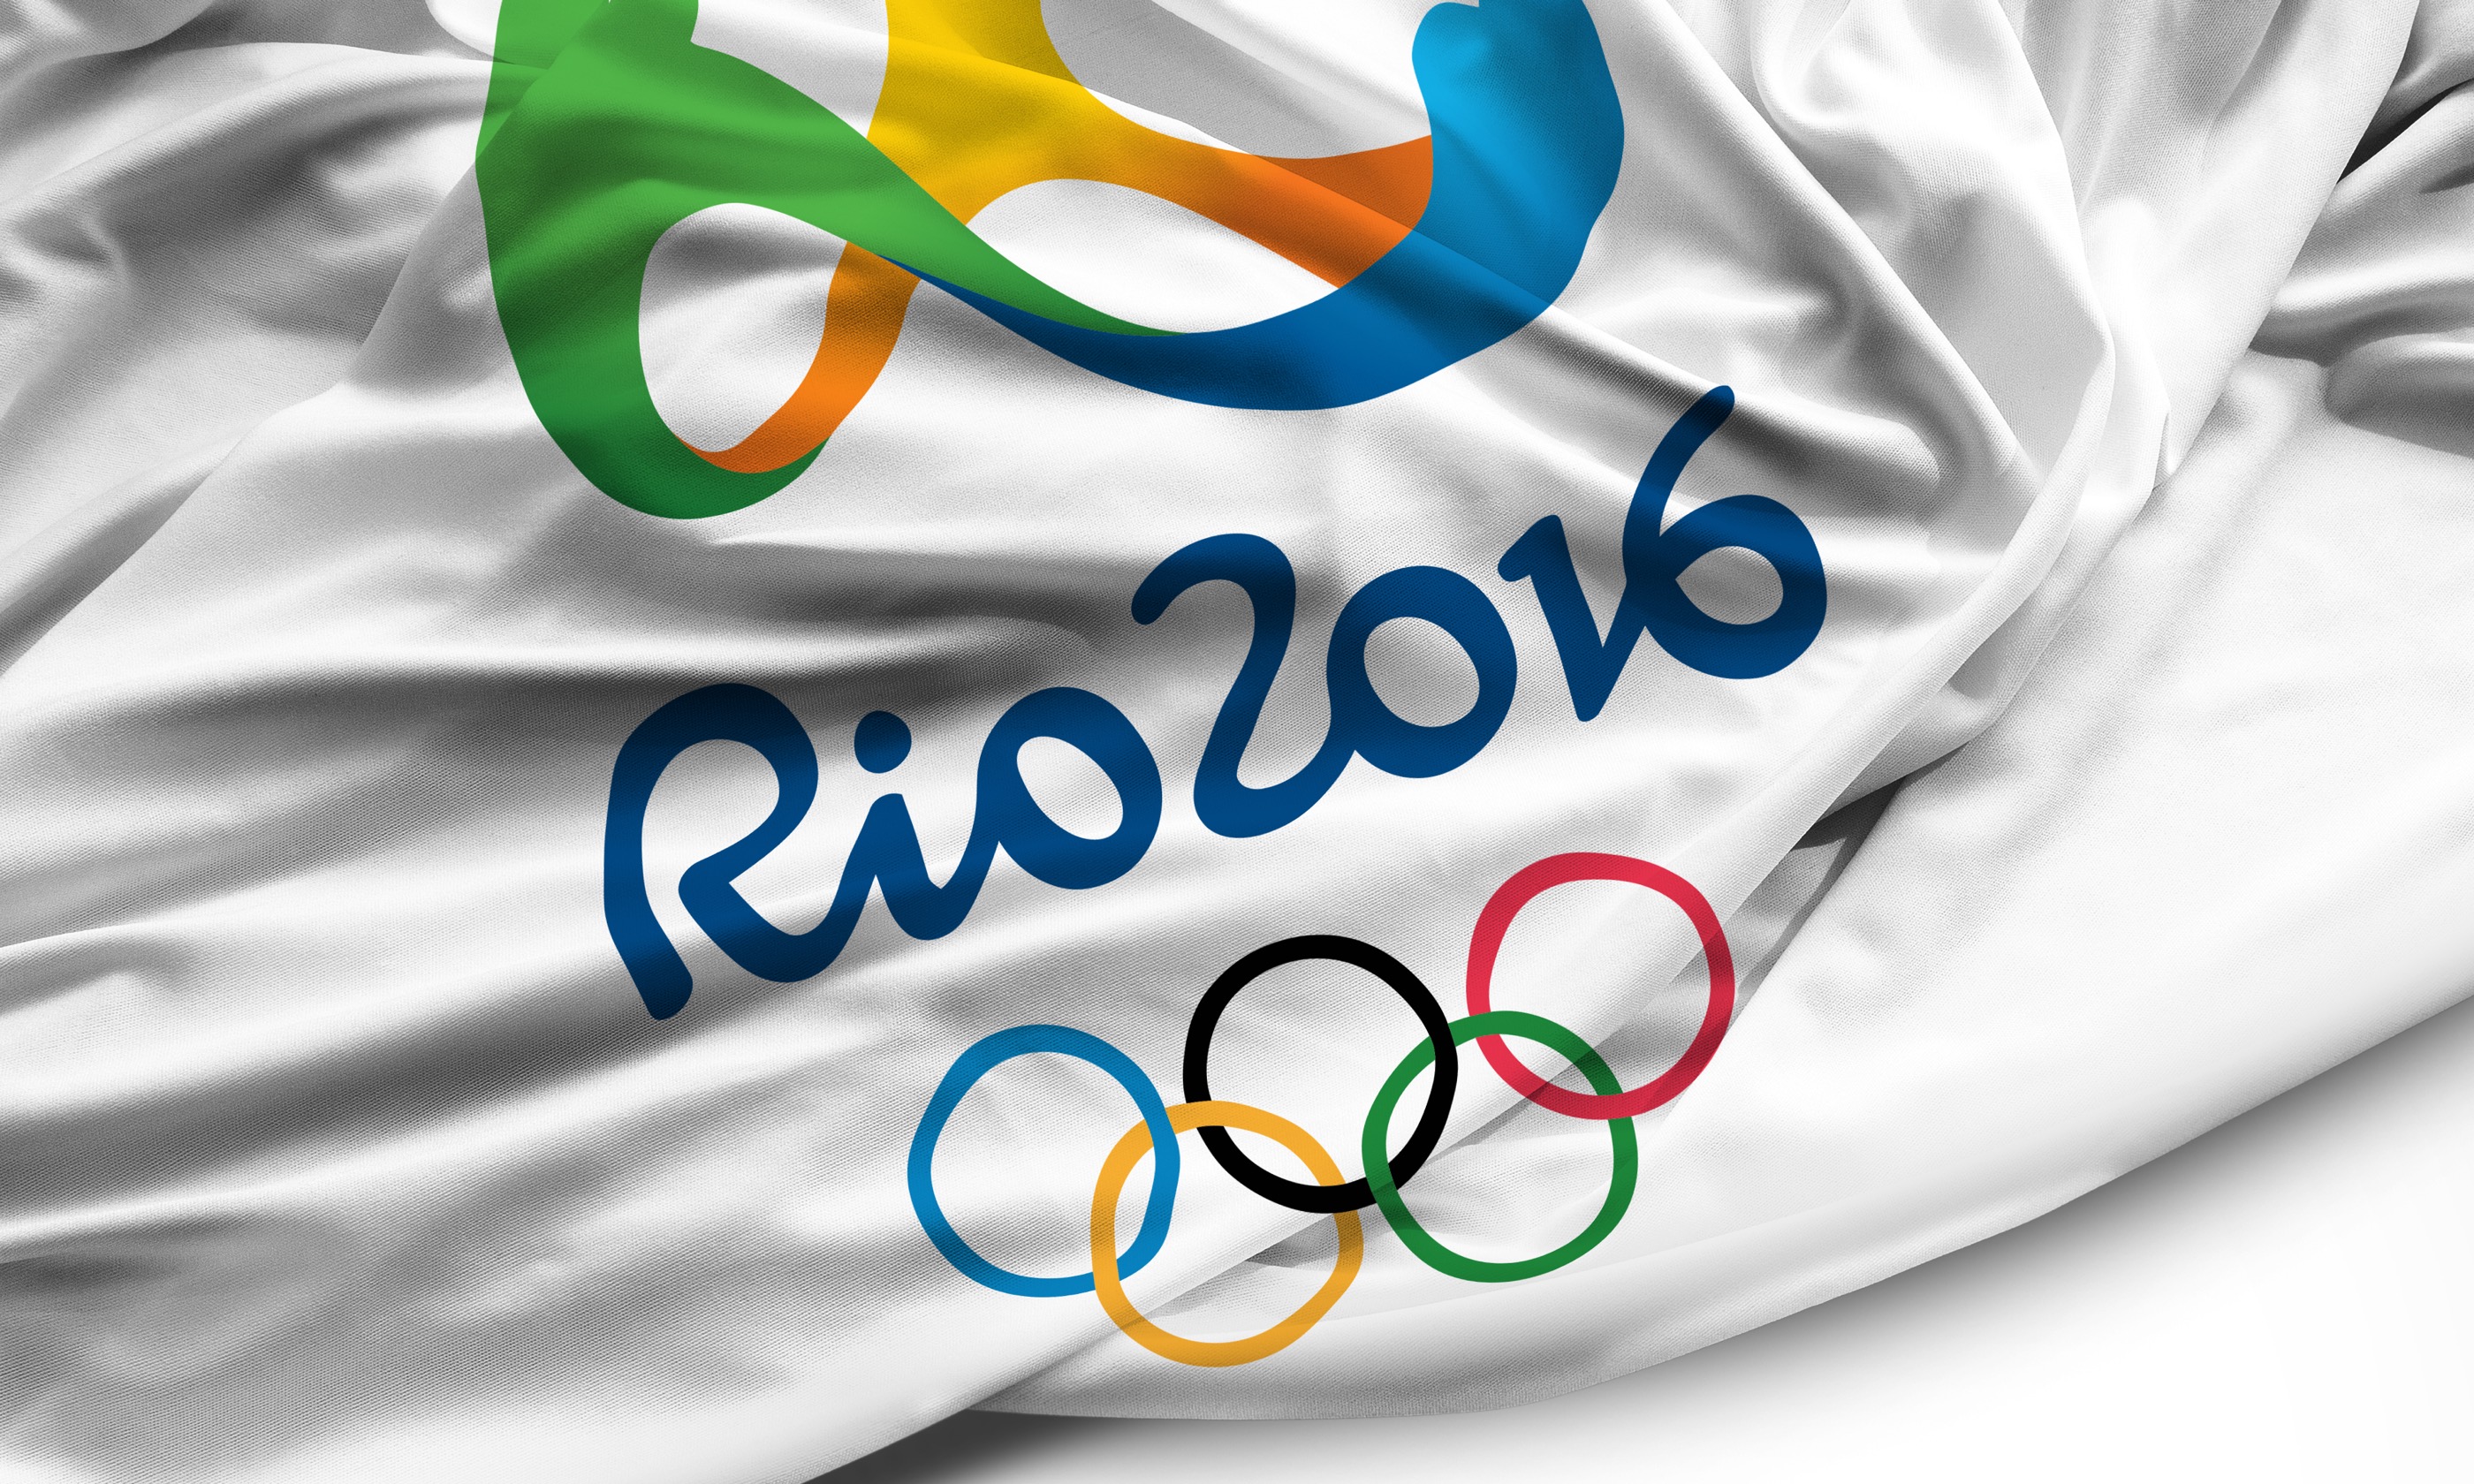 Rio Olympics T-shirt (Shutterstock.com. See main credit below)